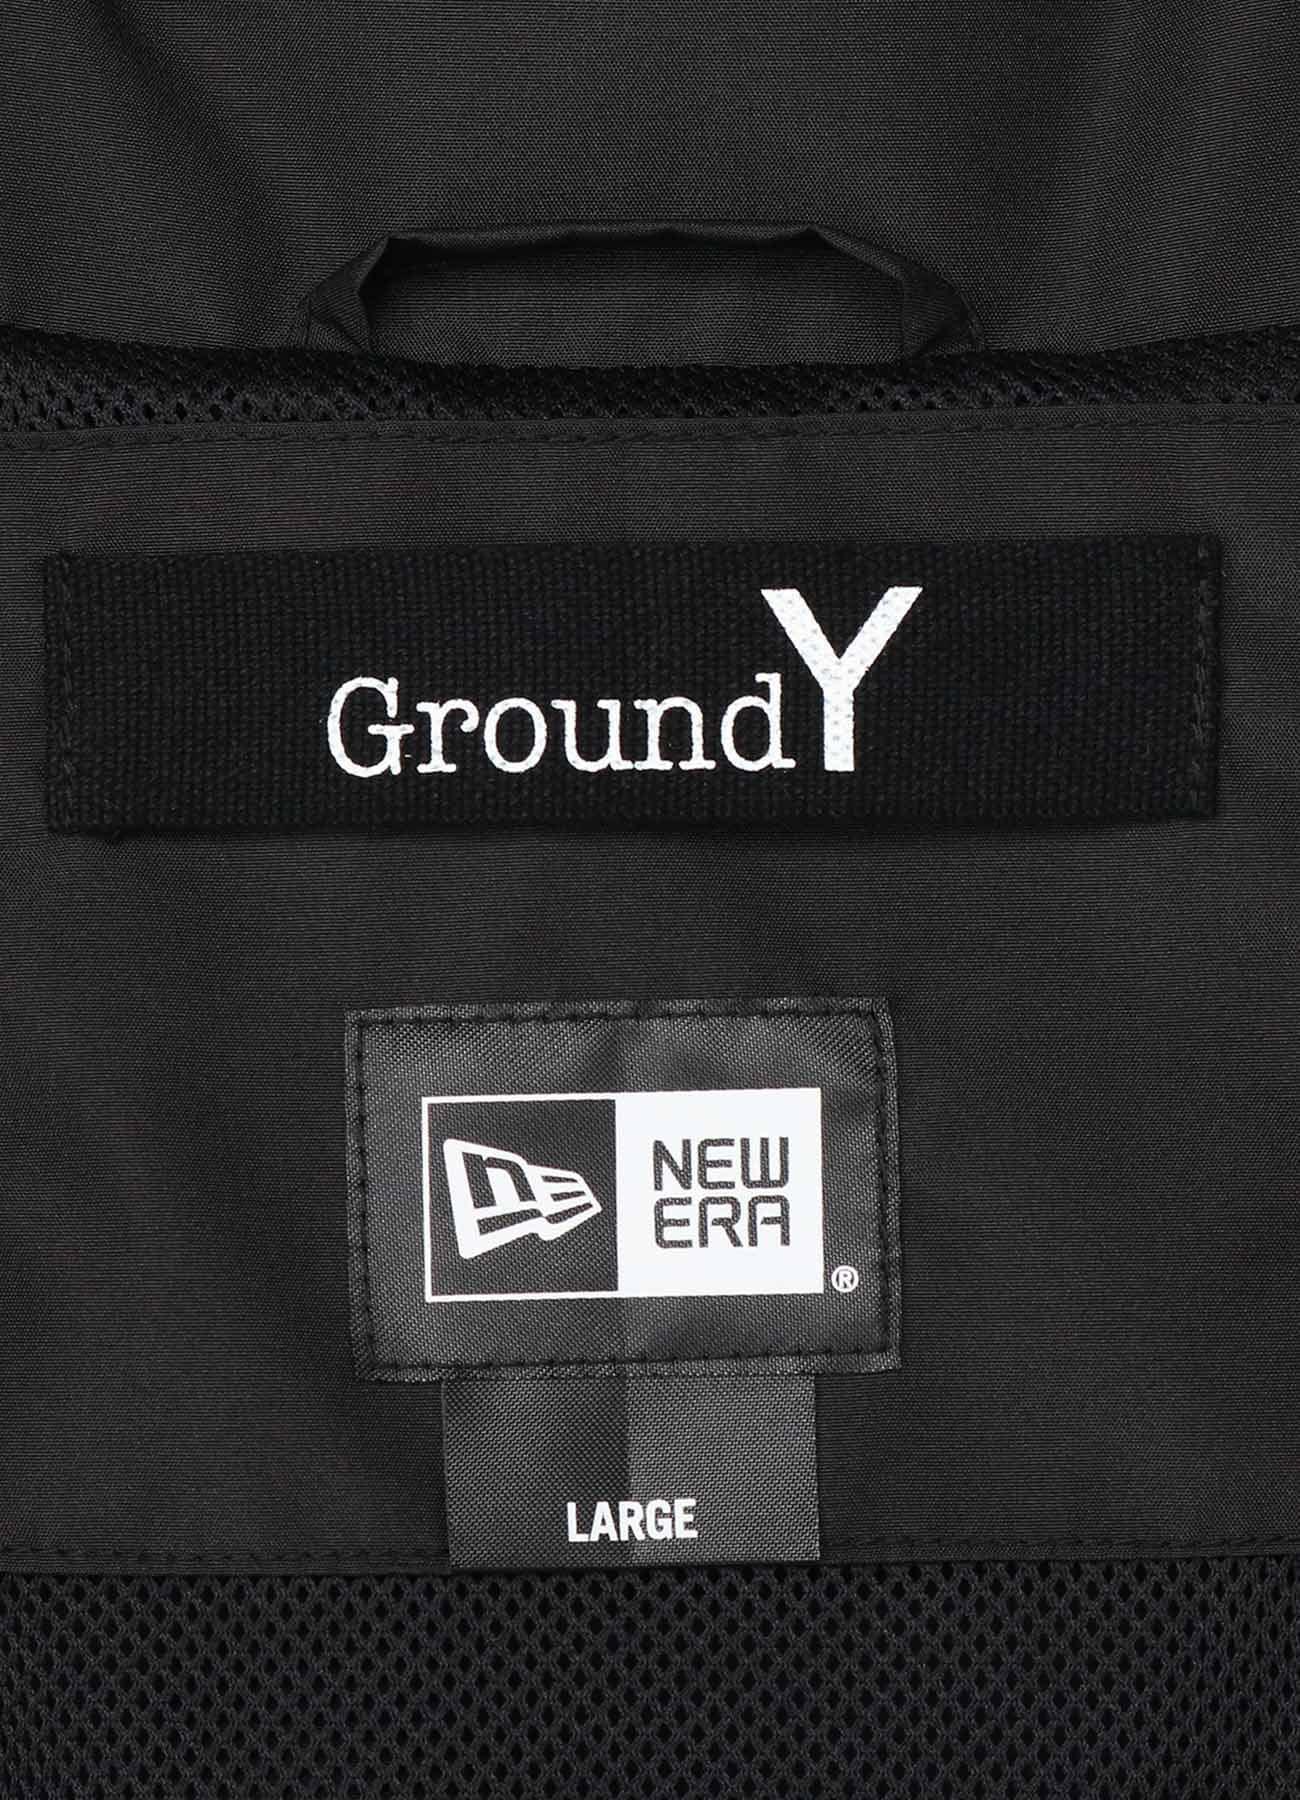 Ground Y×NEW ERA Collection Coach Jacket